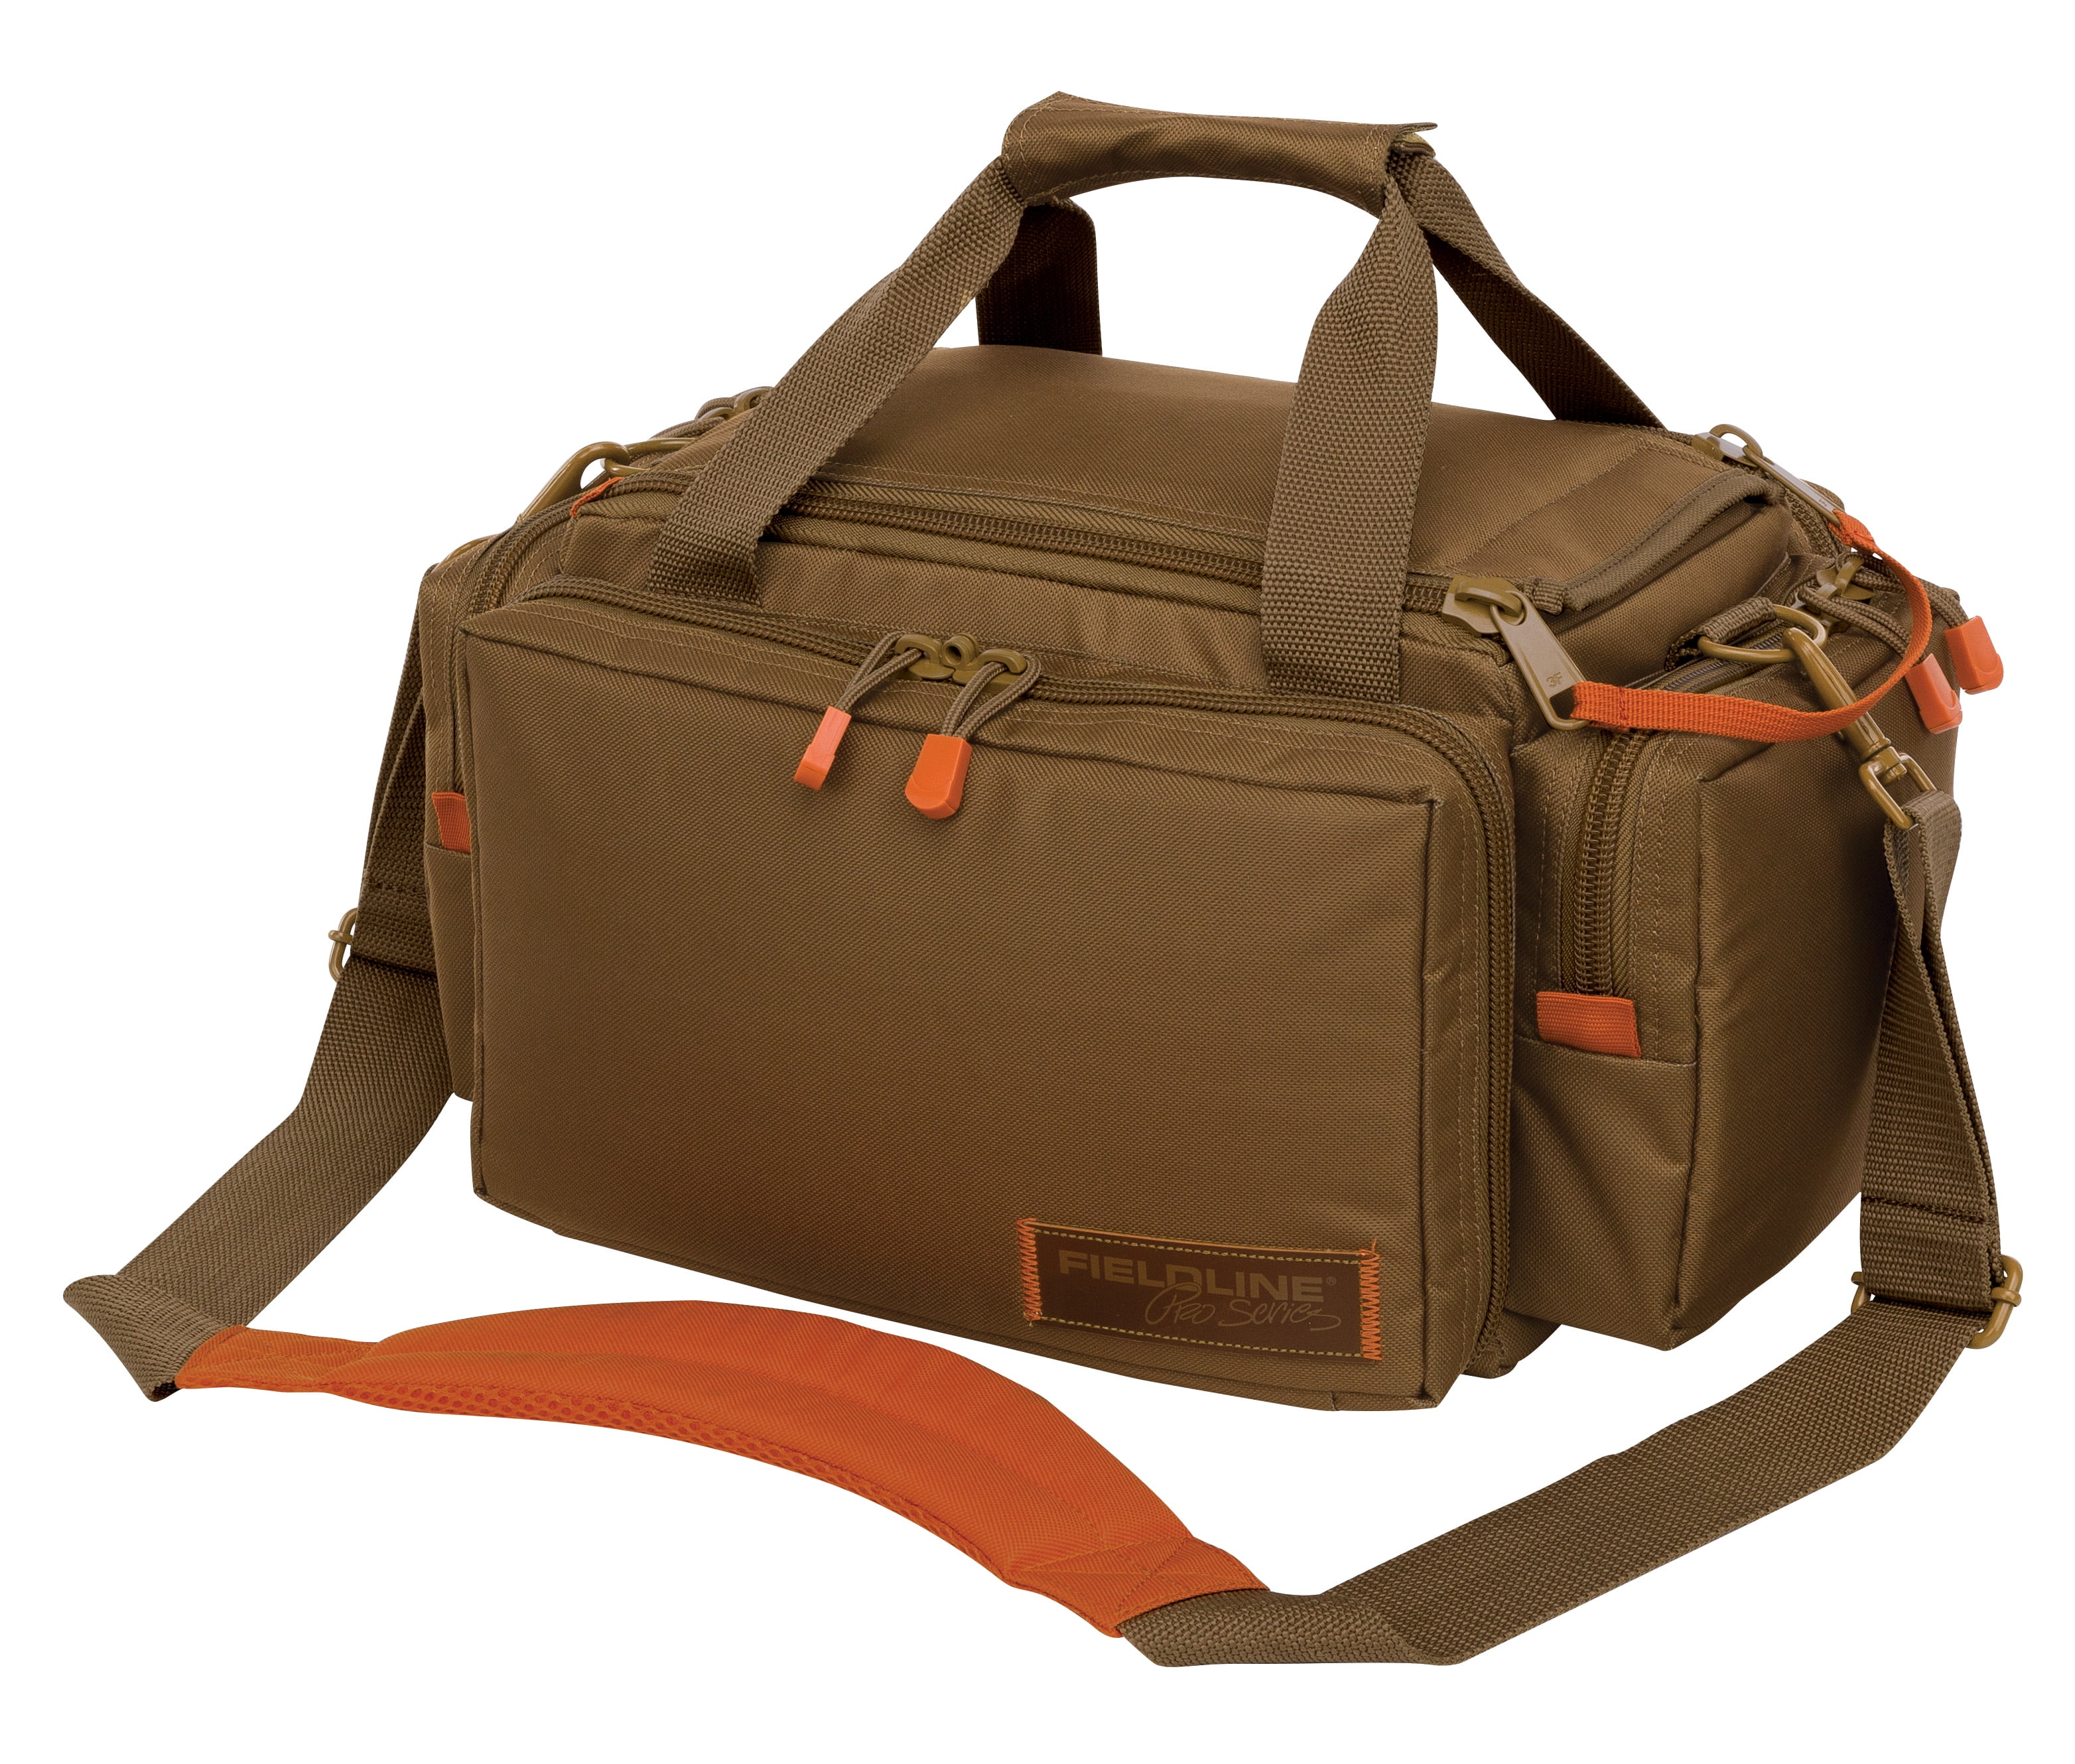 Honma unveils stunning caddie bag range